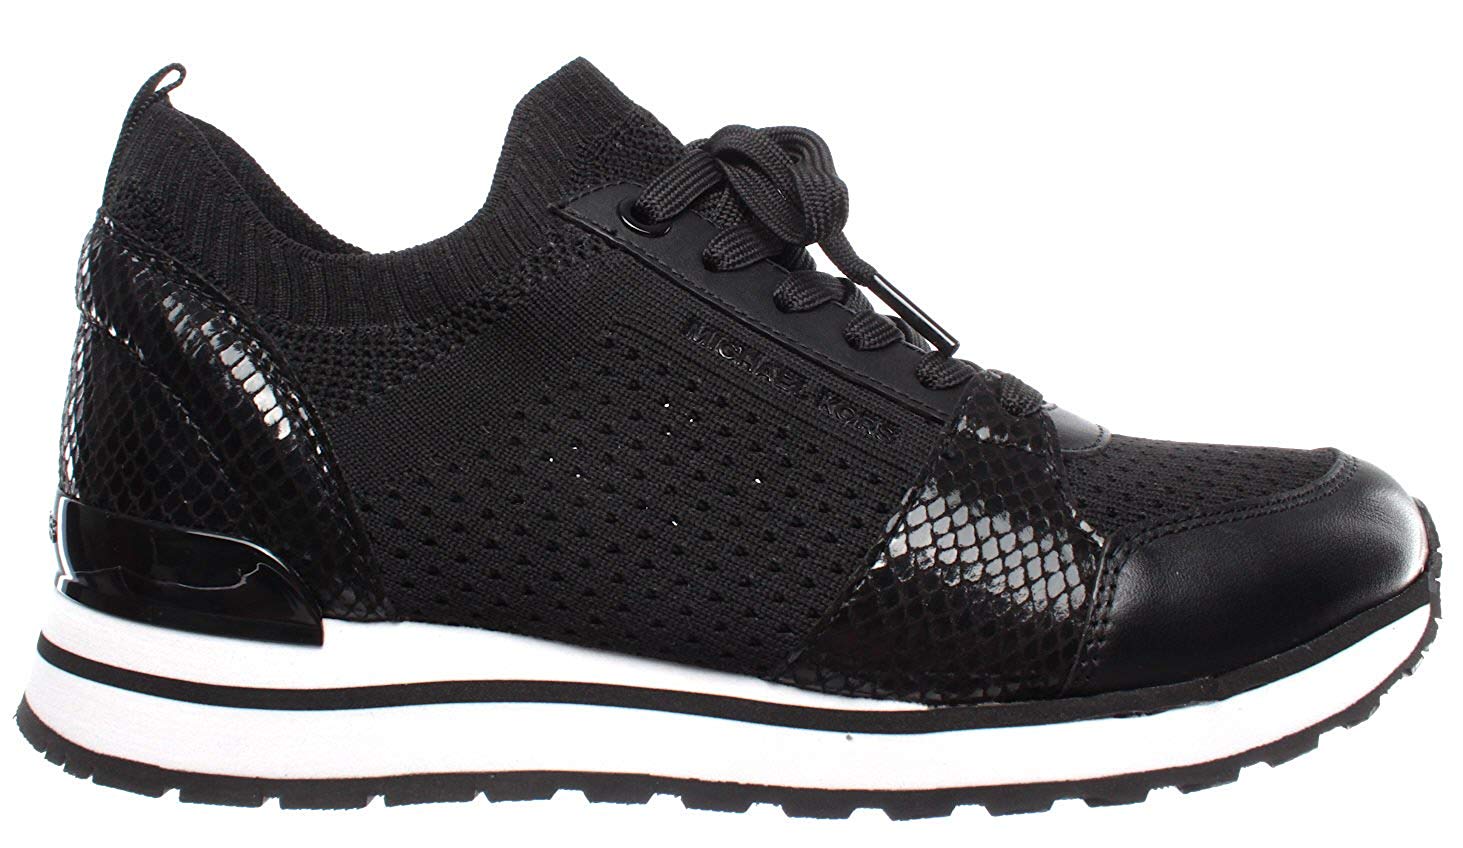 Michael Kors MK Women's Billie Knit Trainer Fabric Sneakers Shoes (9, Black)